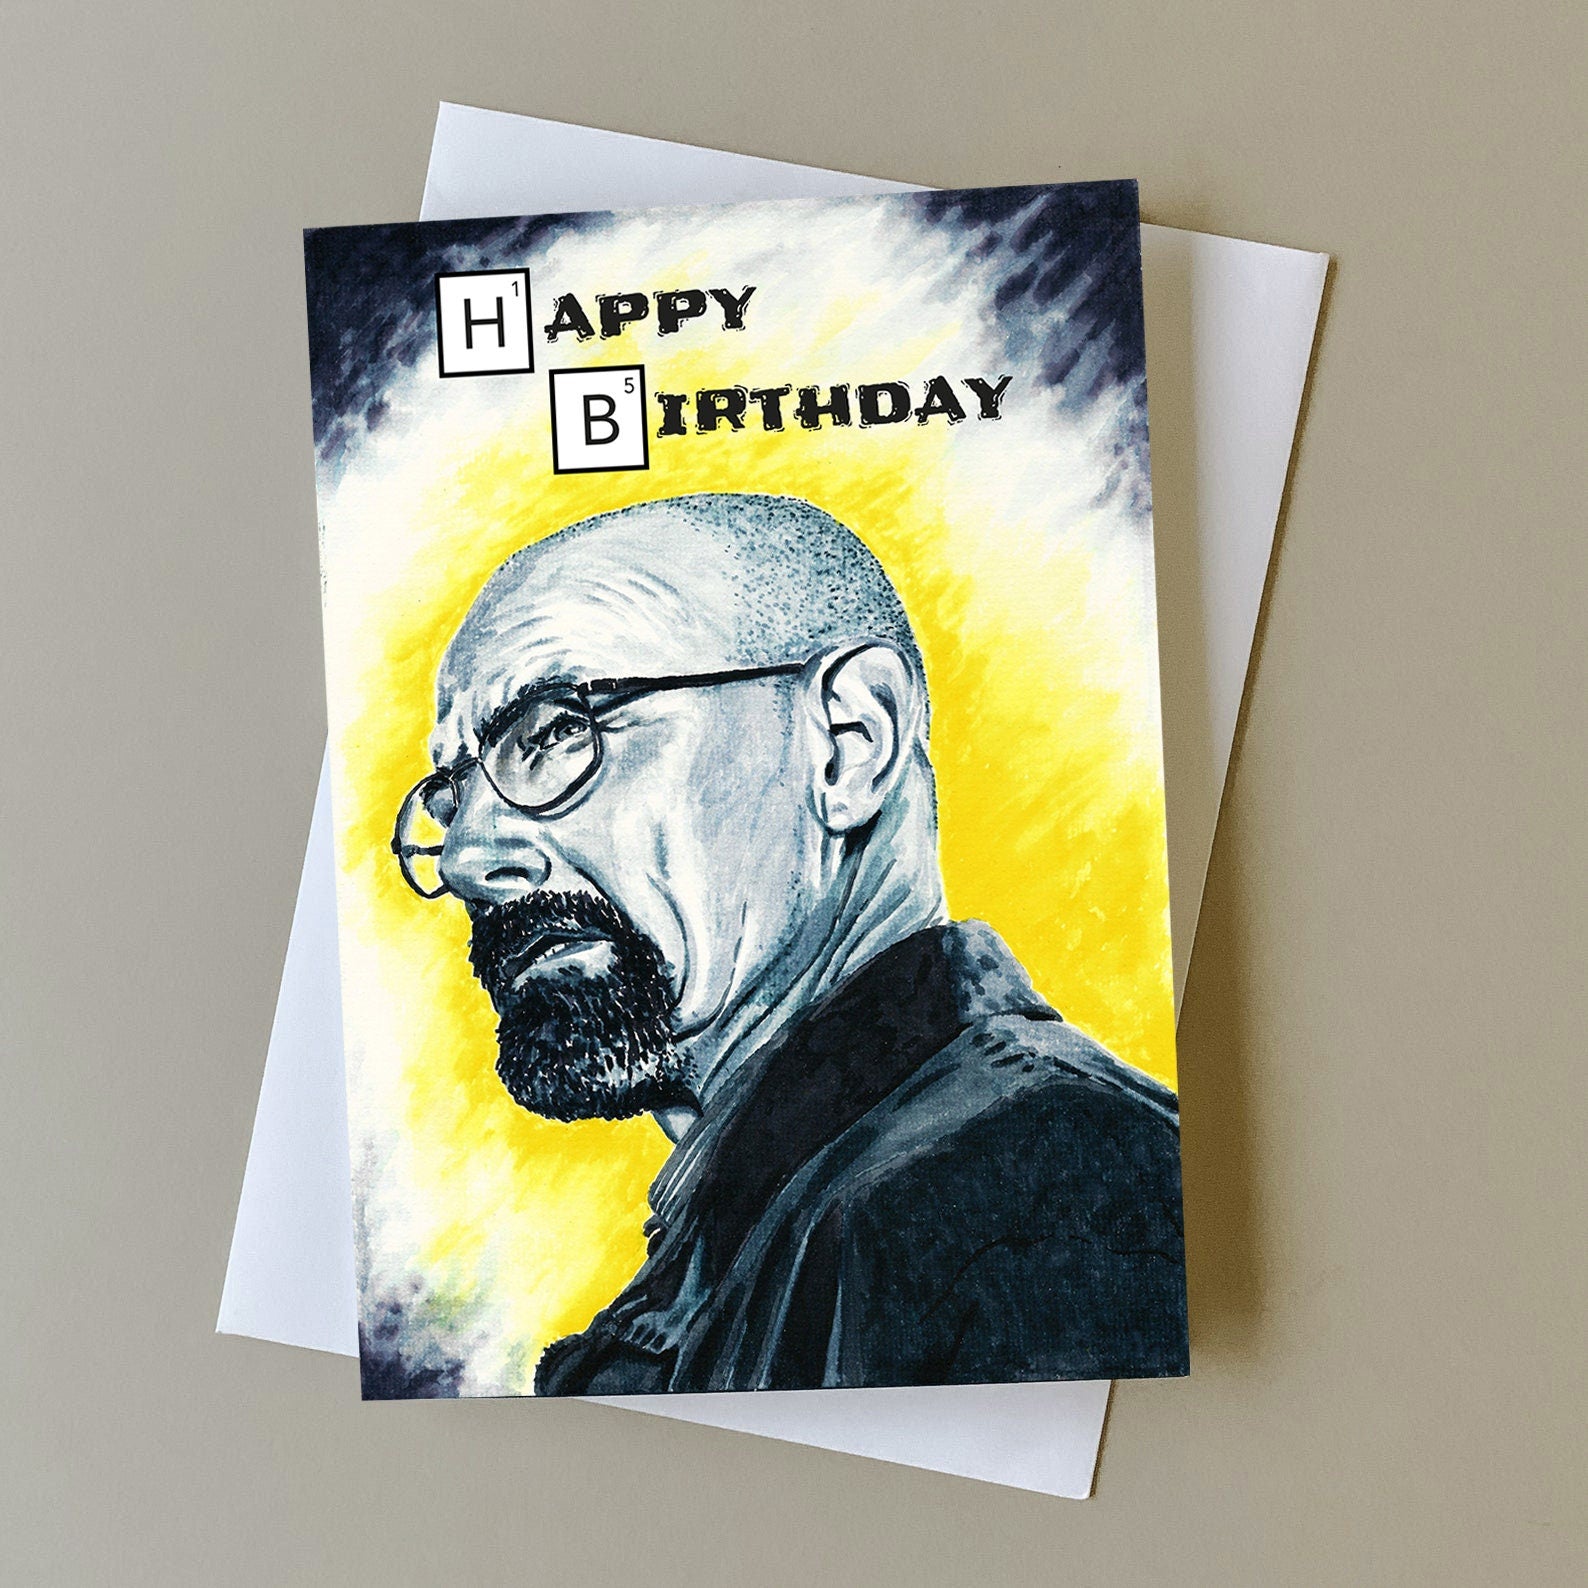 Breaking Bad birthday card, Walter White birthday card, Breaking Bad TV Series gift, card for Breaking Bad fan, Bryan Cranston birthday card